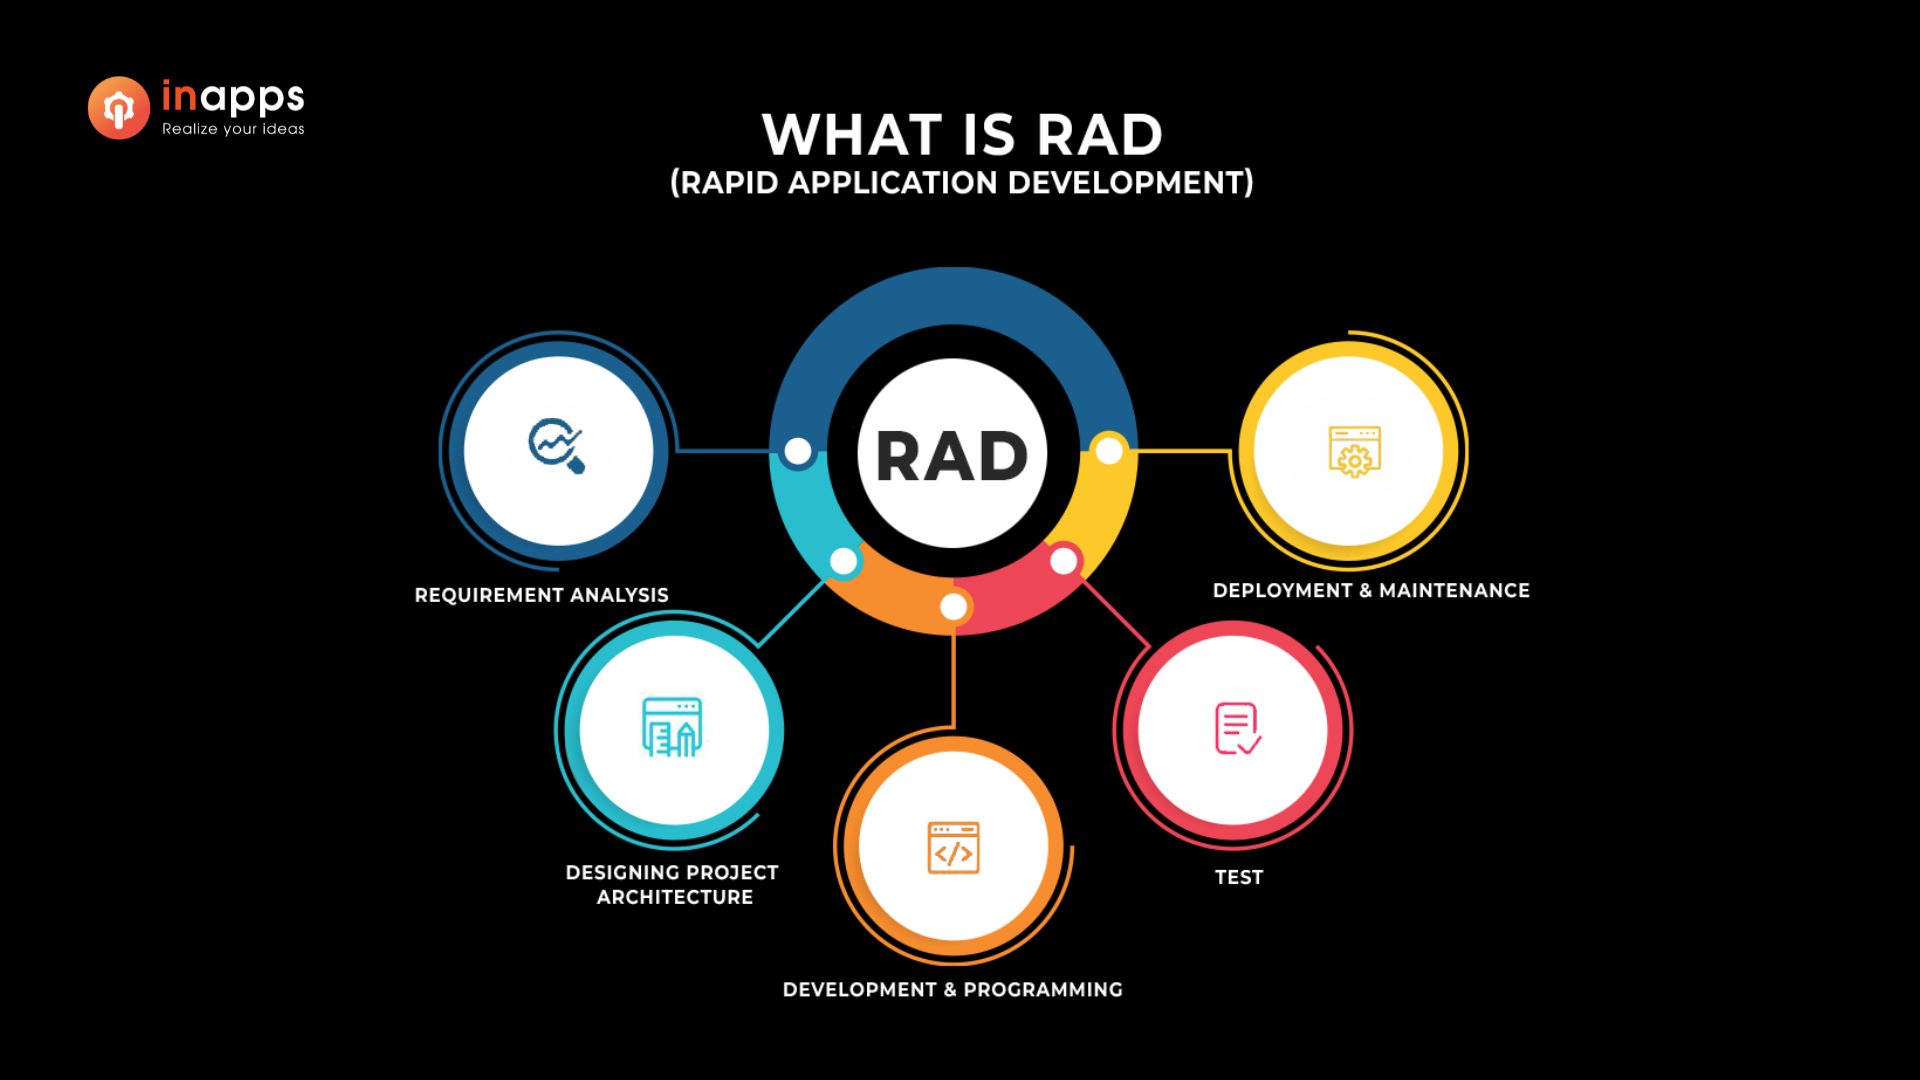 rapid application development - Inapps